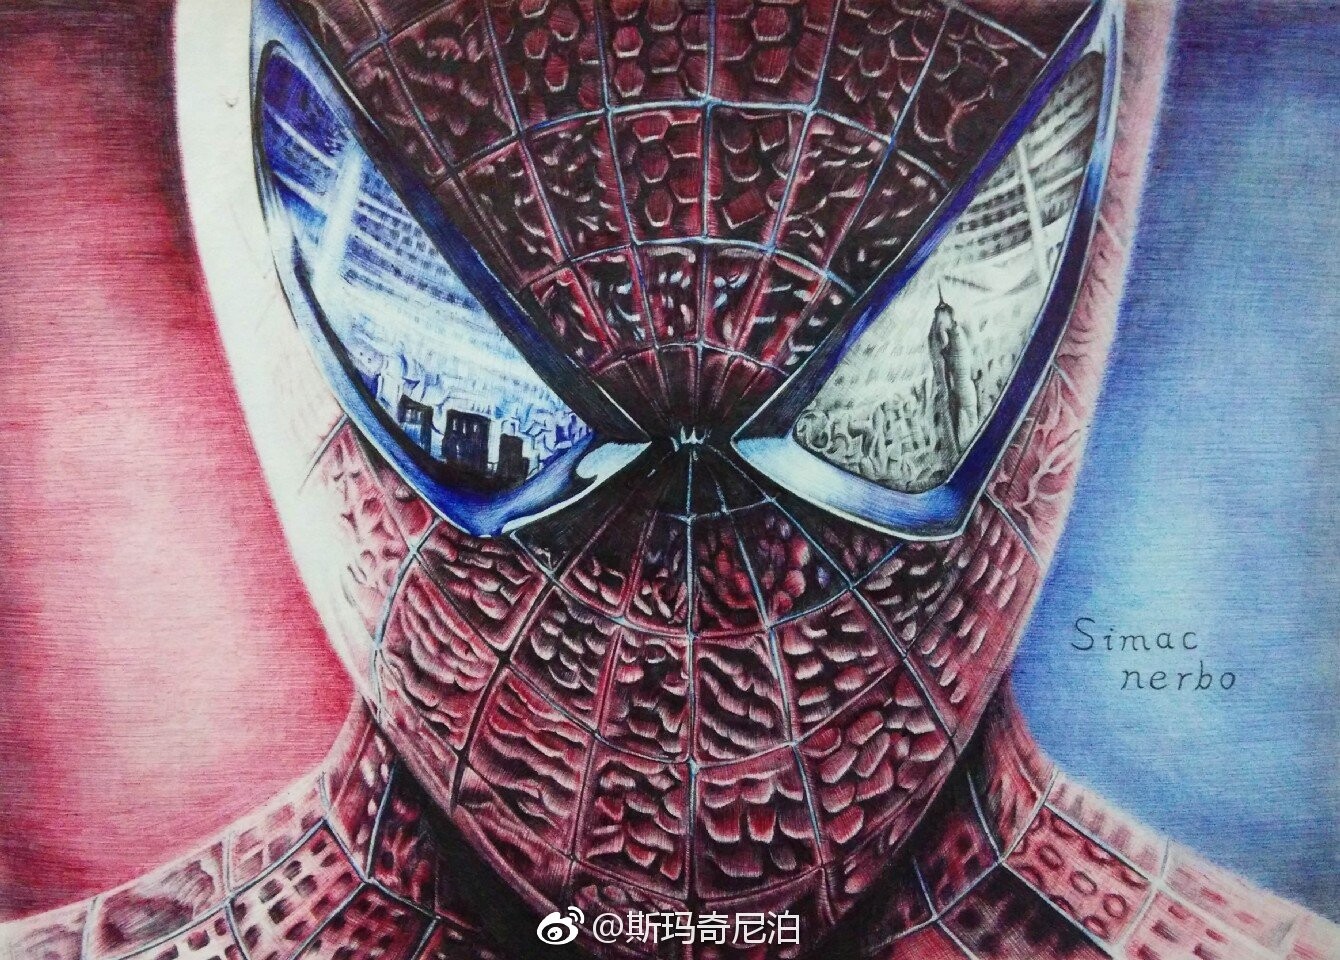 ArtStation - Spider-Man 2002 Prototype Painting